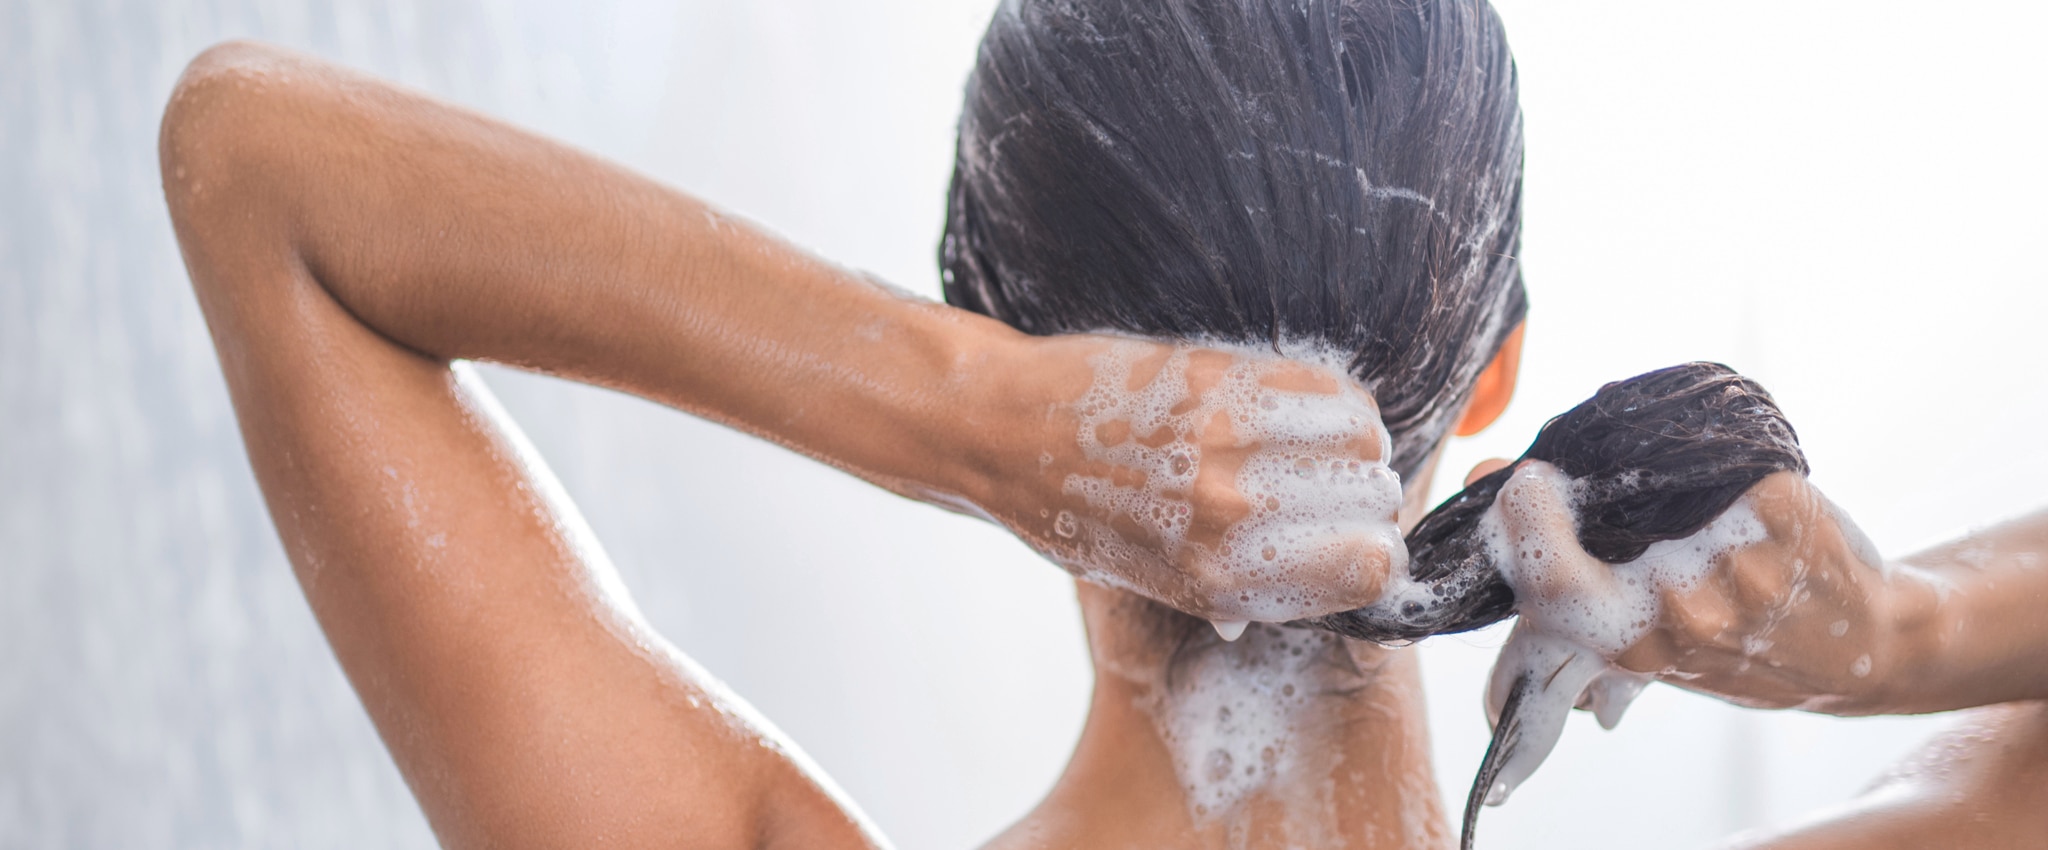 Woman lathering shampoo into hair